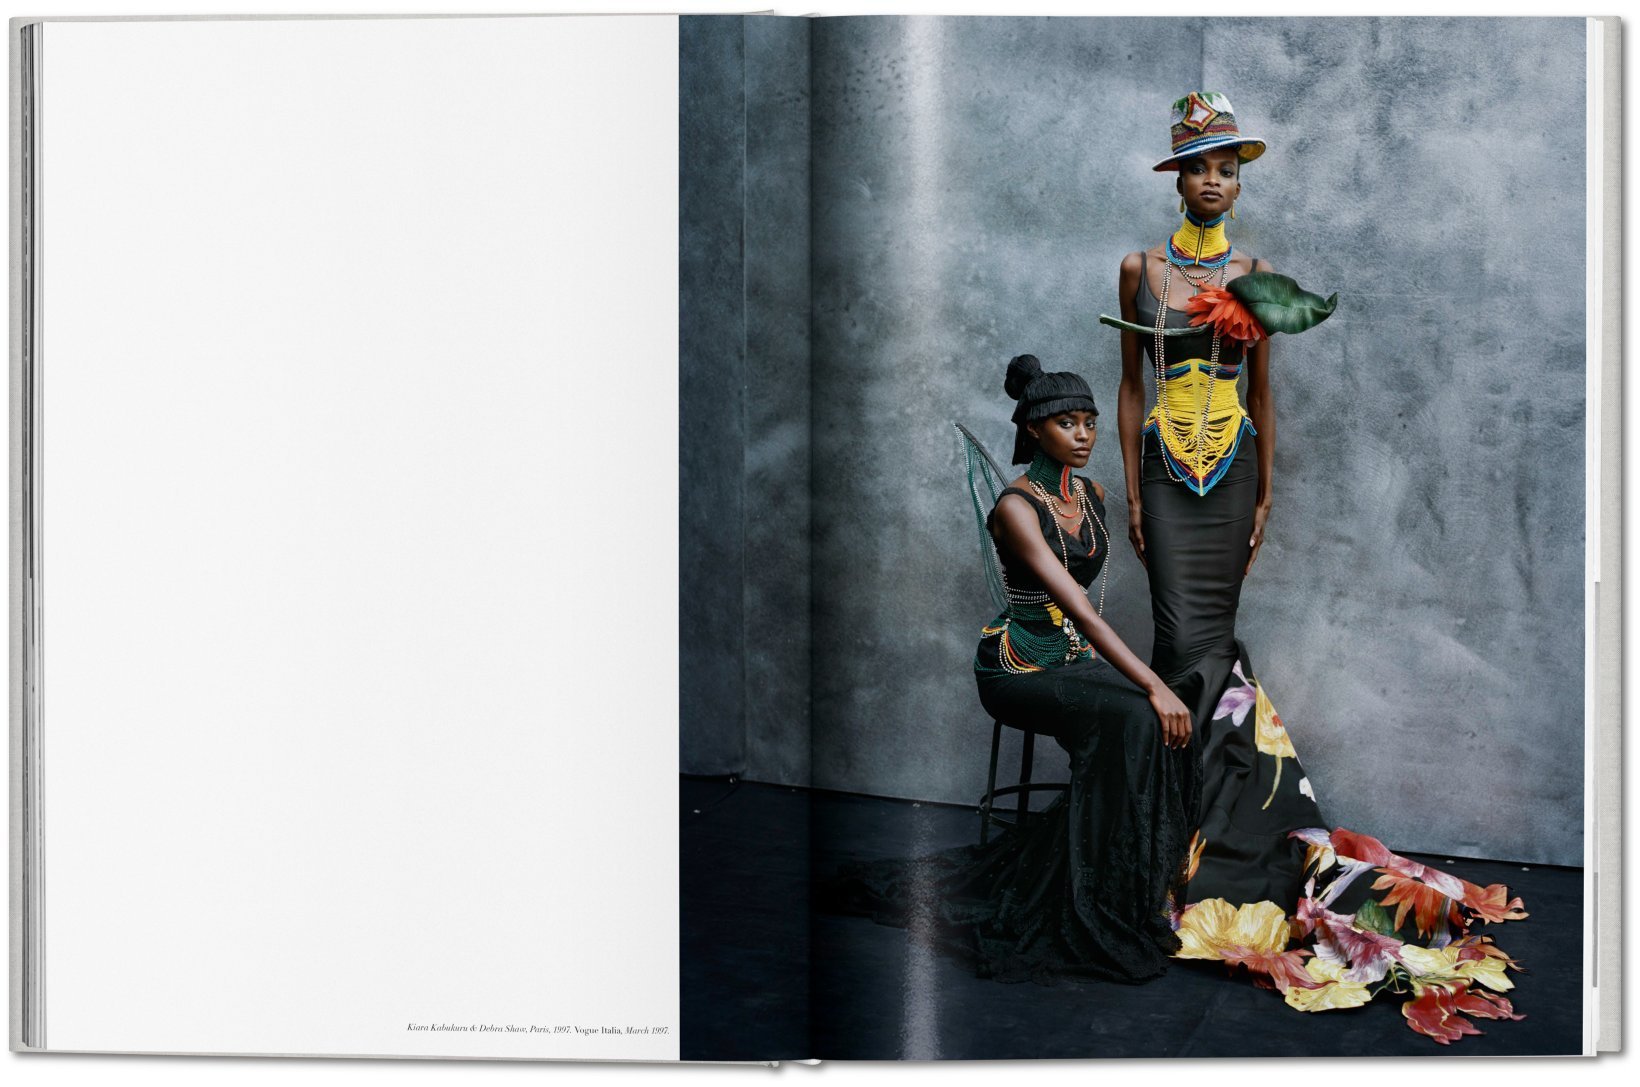 Dior lanza un libro en honor a Peter Lindbergh con fotografías inéditas